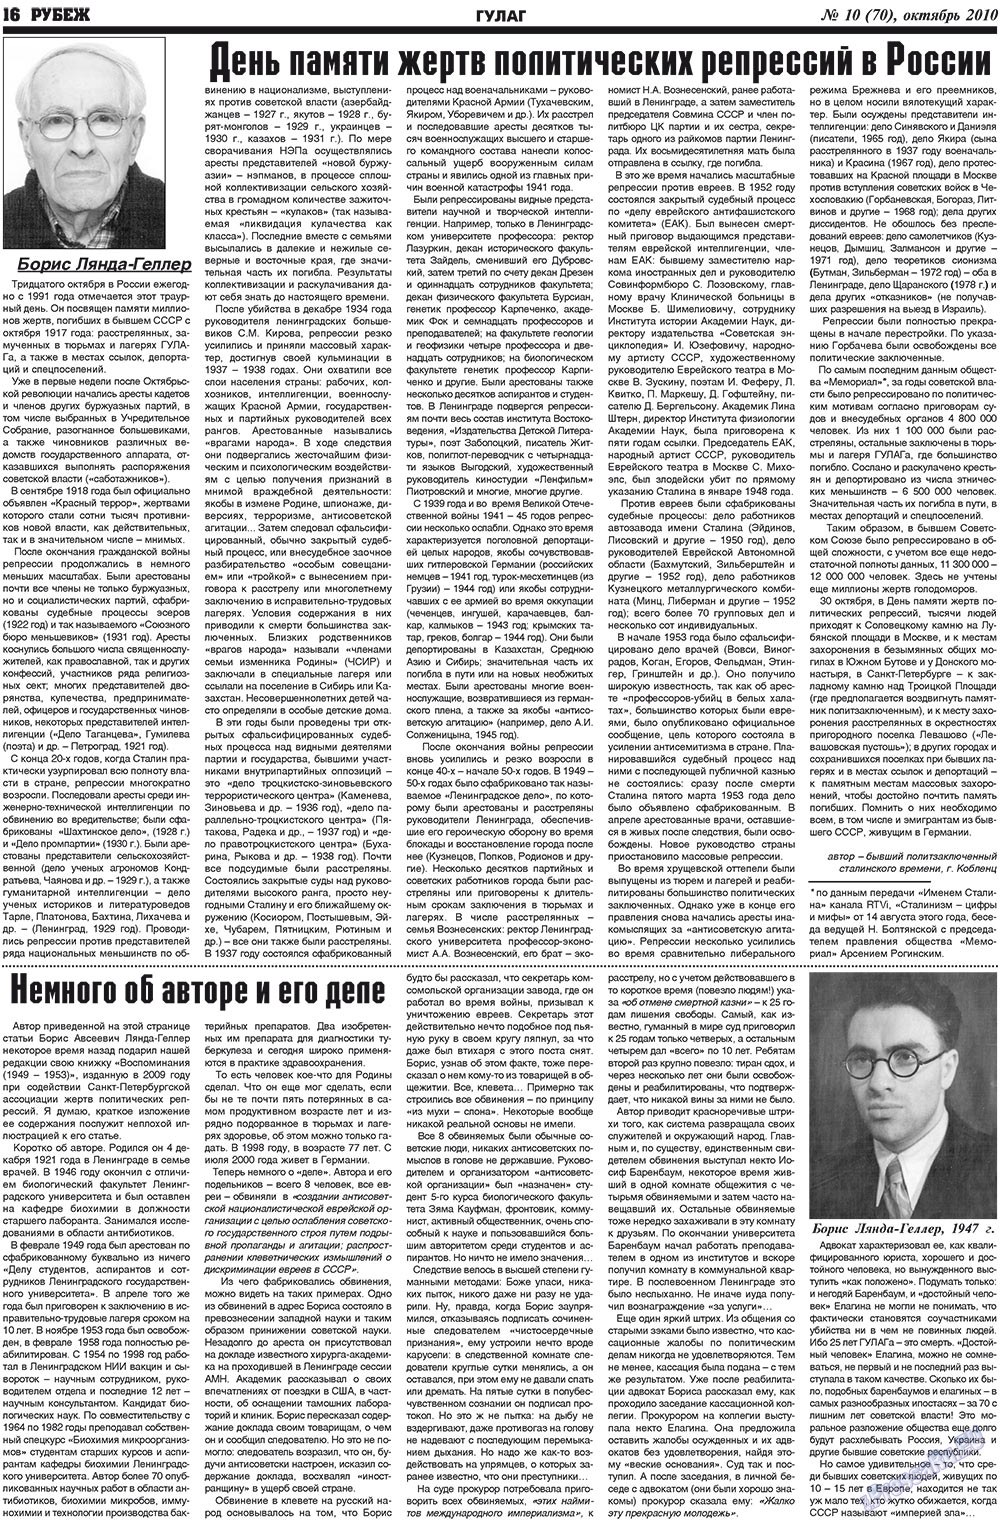 Рубеж, газета. 2010 №10 стр.16